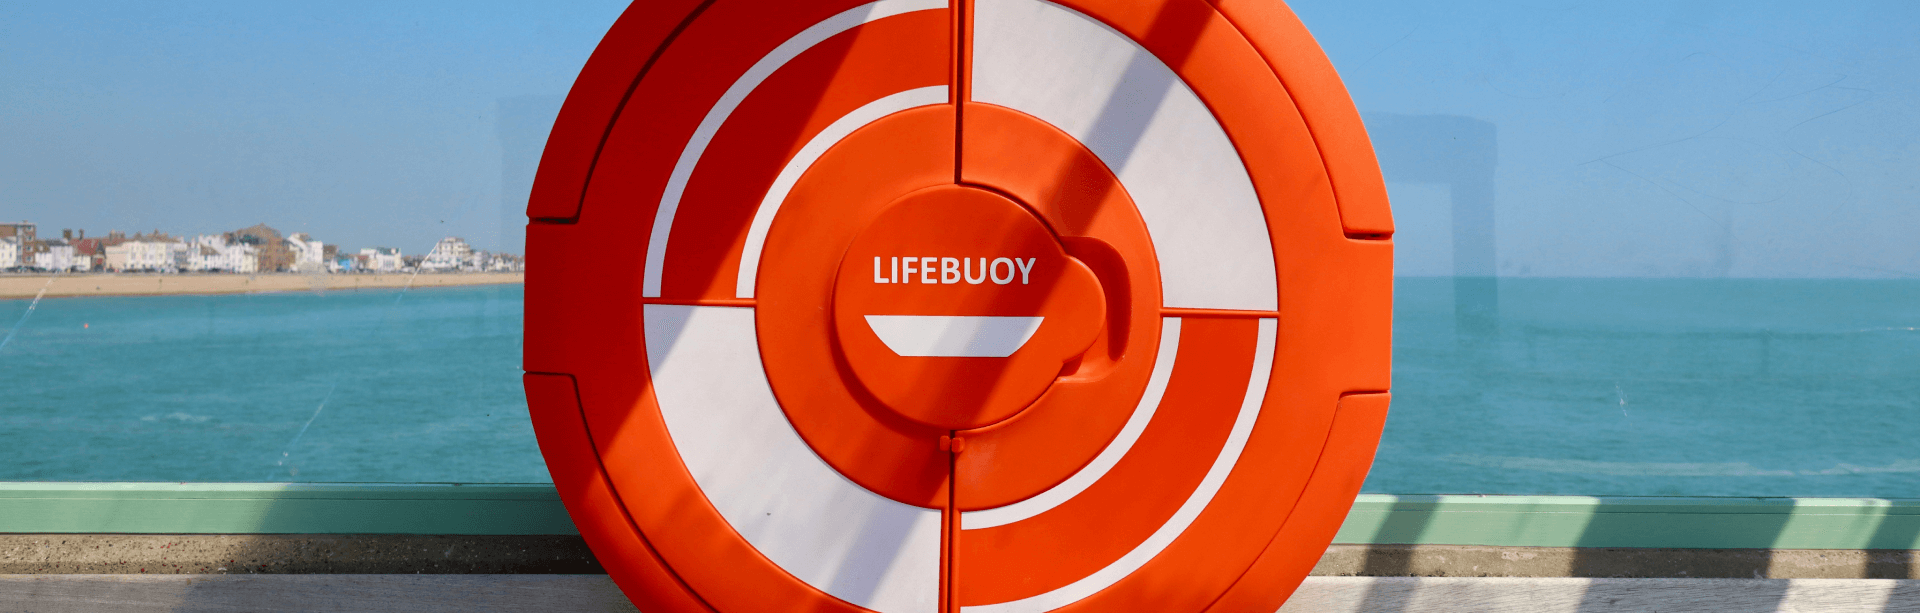 Lifebuoy Sets